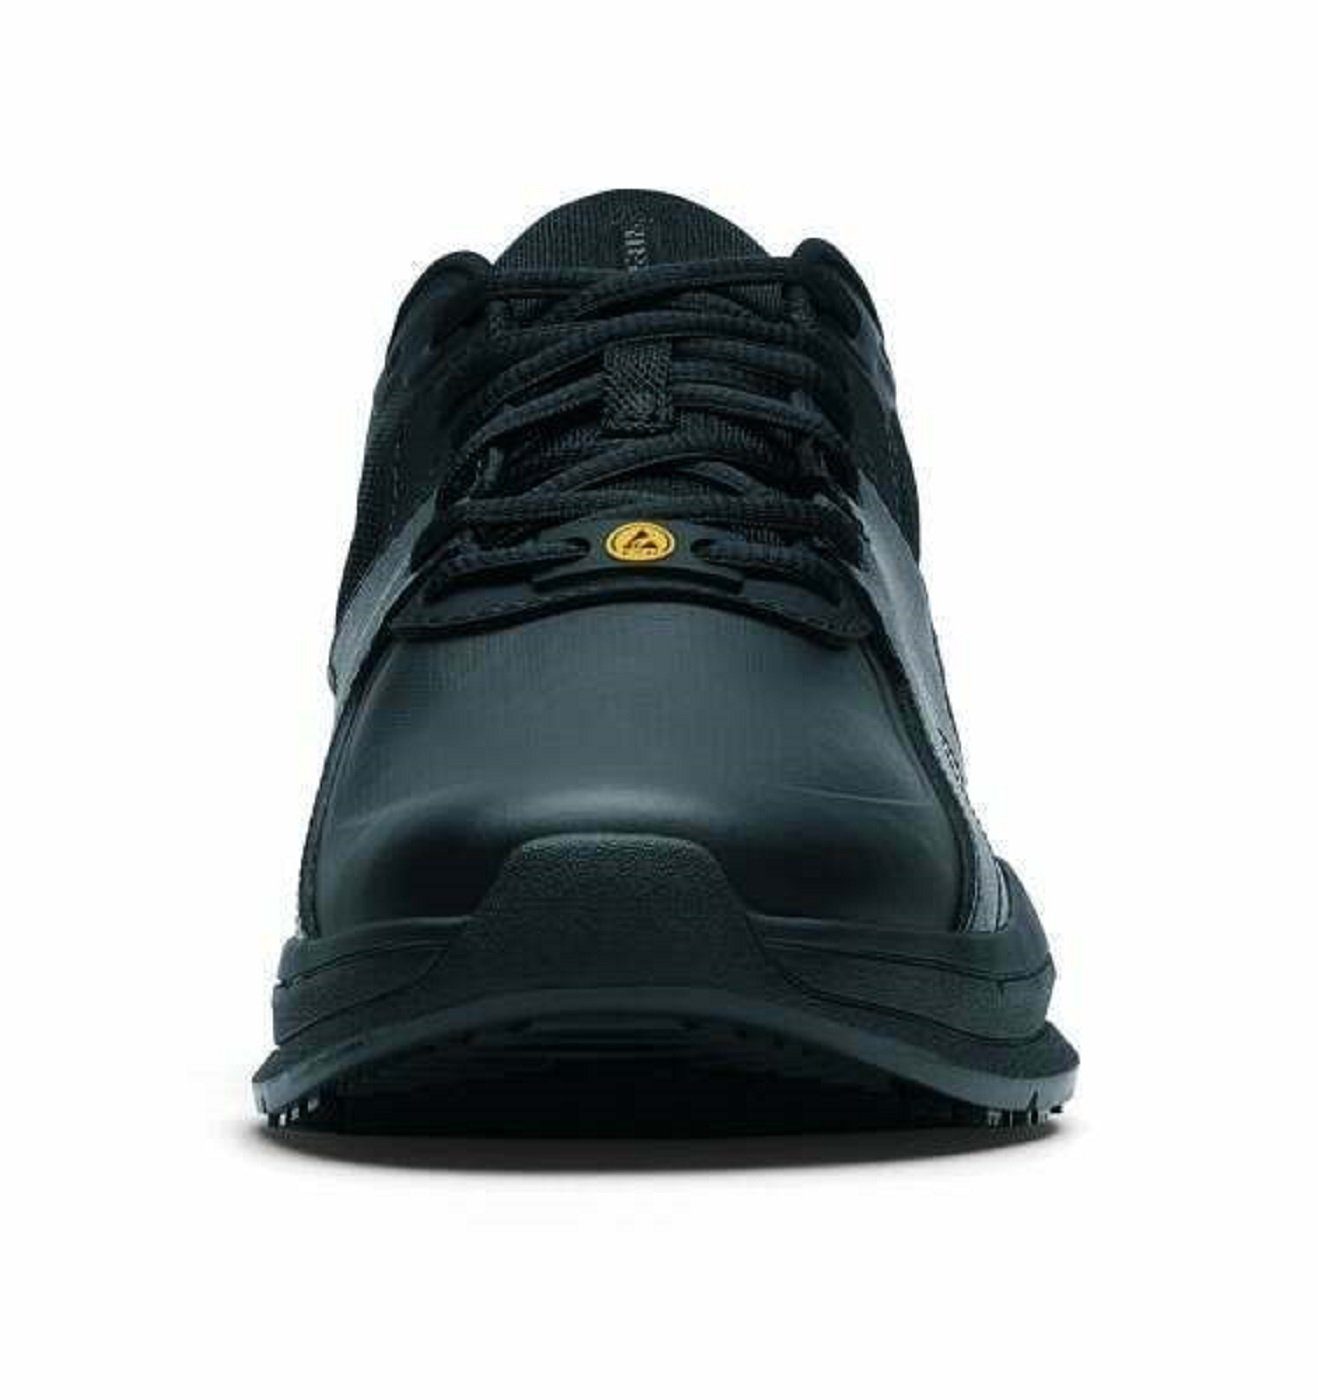 Shoes For Crews SFC-Laufsohle II Leder, CONDOR schwarz, Sicherheitsschuh UNISEX